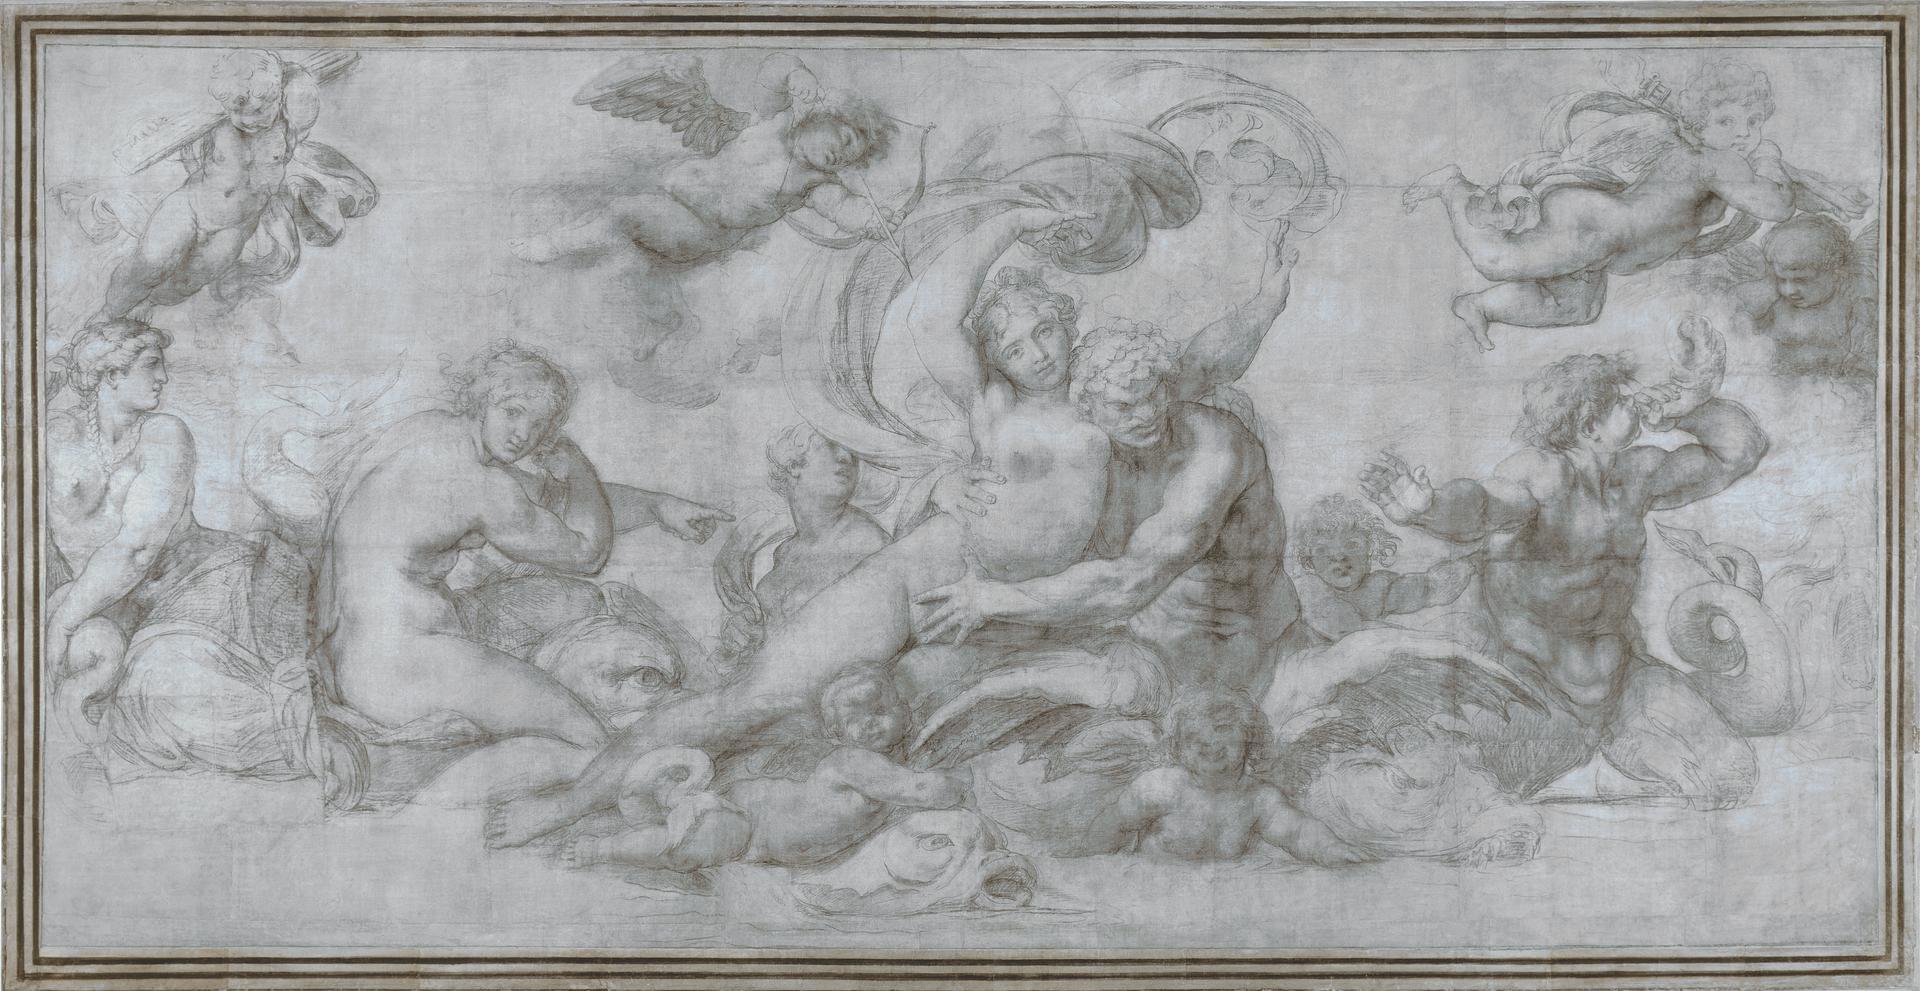 A Woman borne off by a Sea God (?) by Agostino Carracci